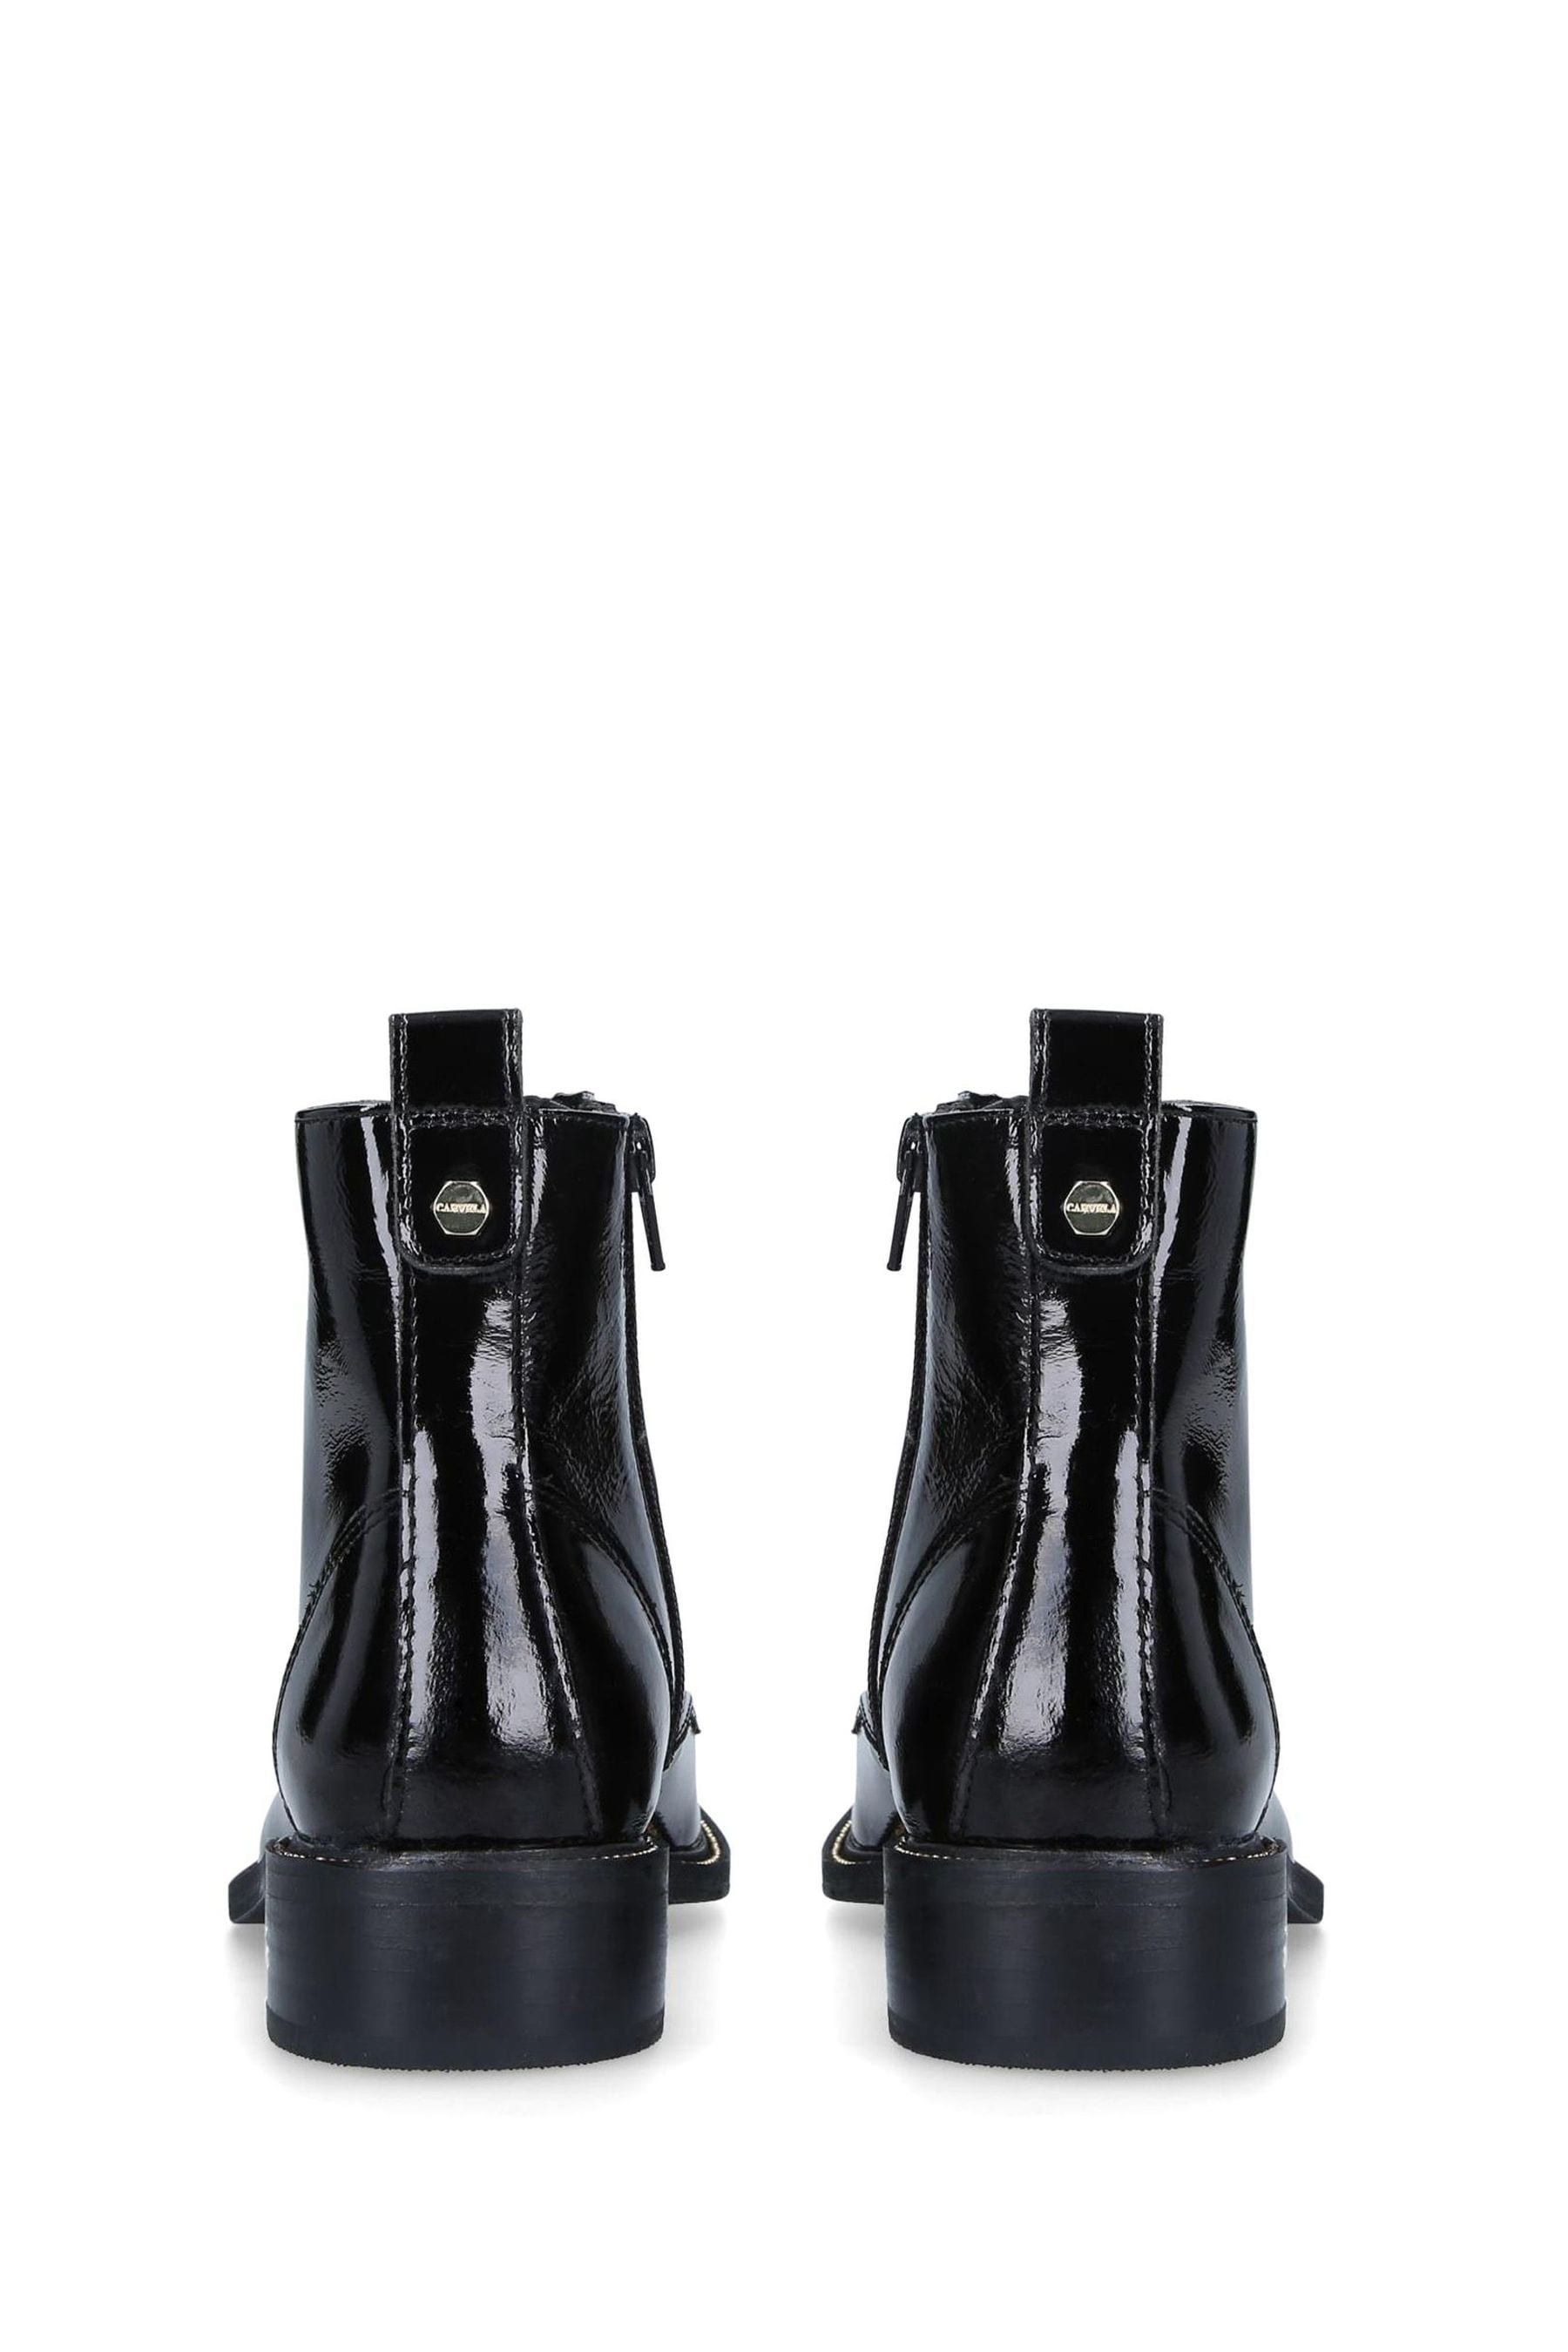 Buy Carvela Black Spike Shoes from the Next UK online shop